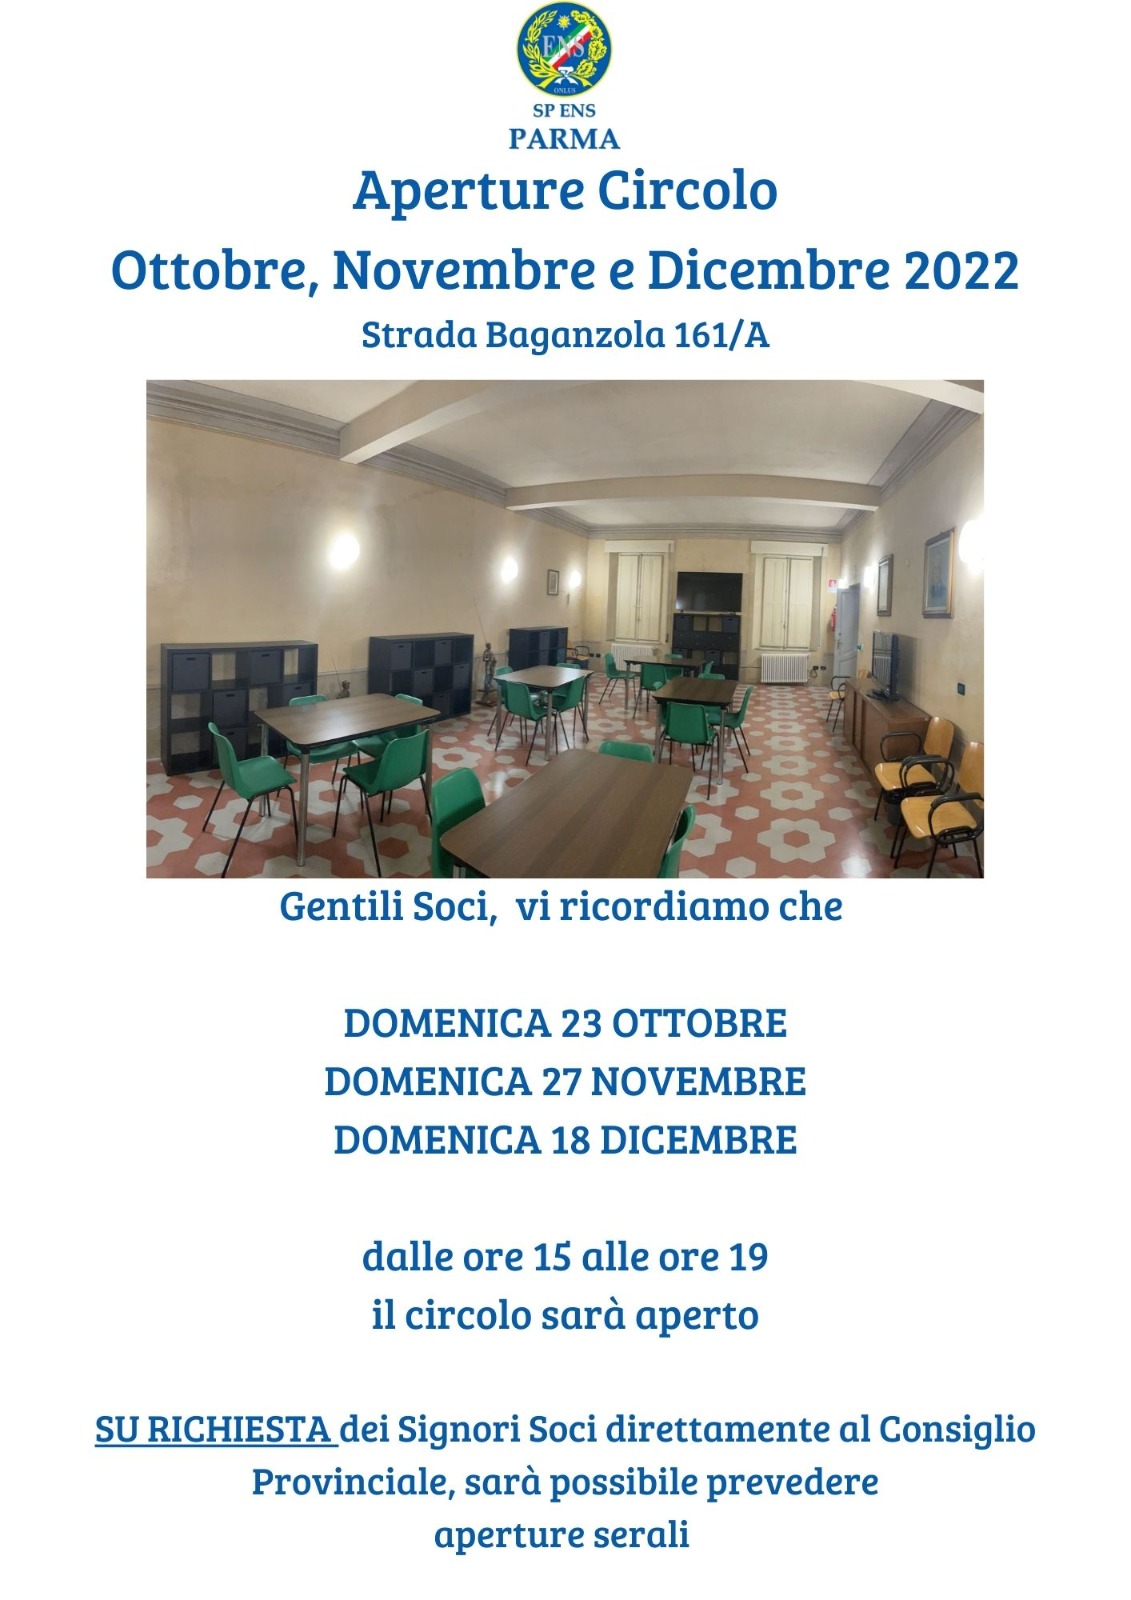 Aperture Circolo da Ottobre a Dicembre 2022 ENS Parma.jpeg